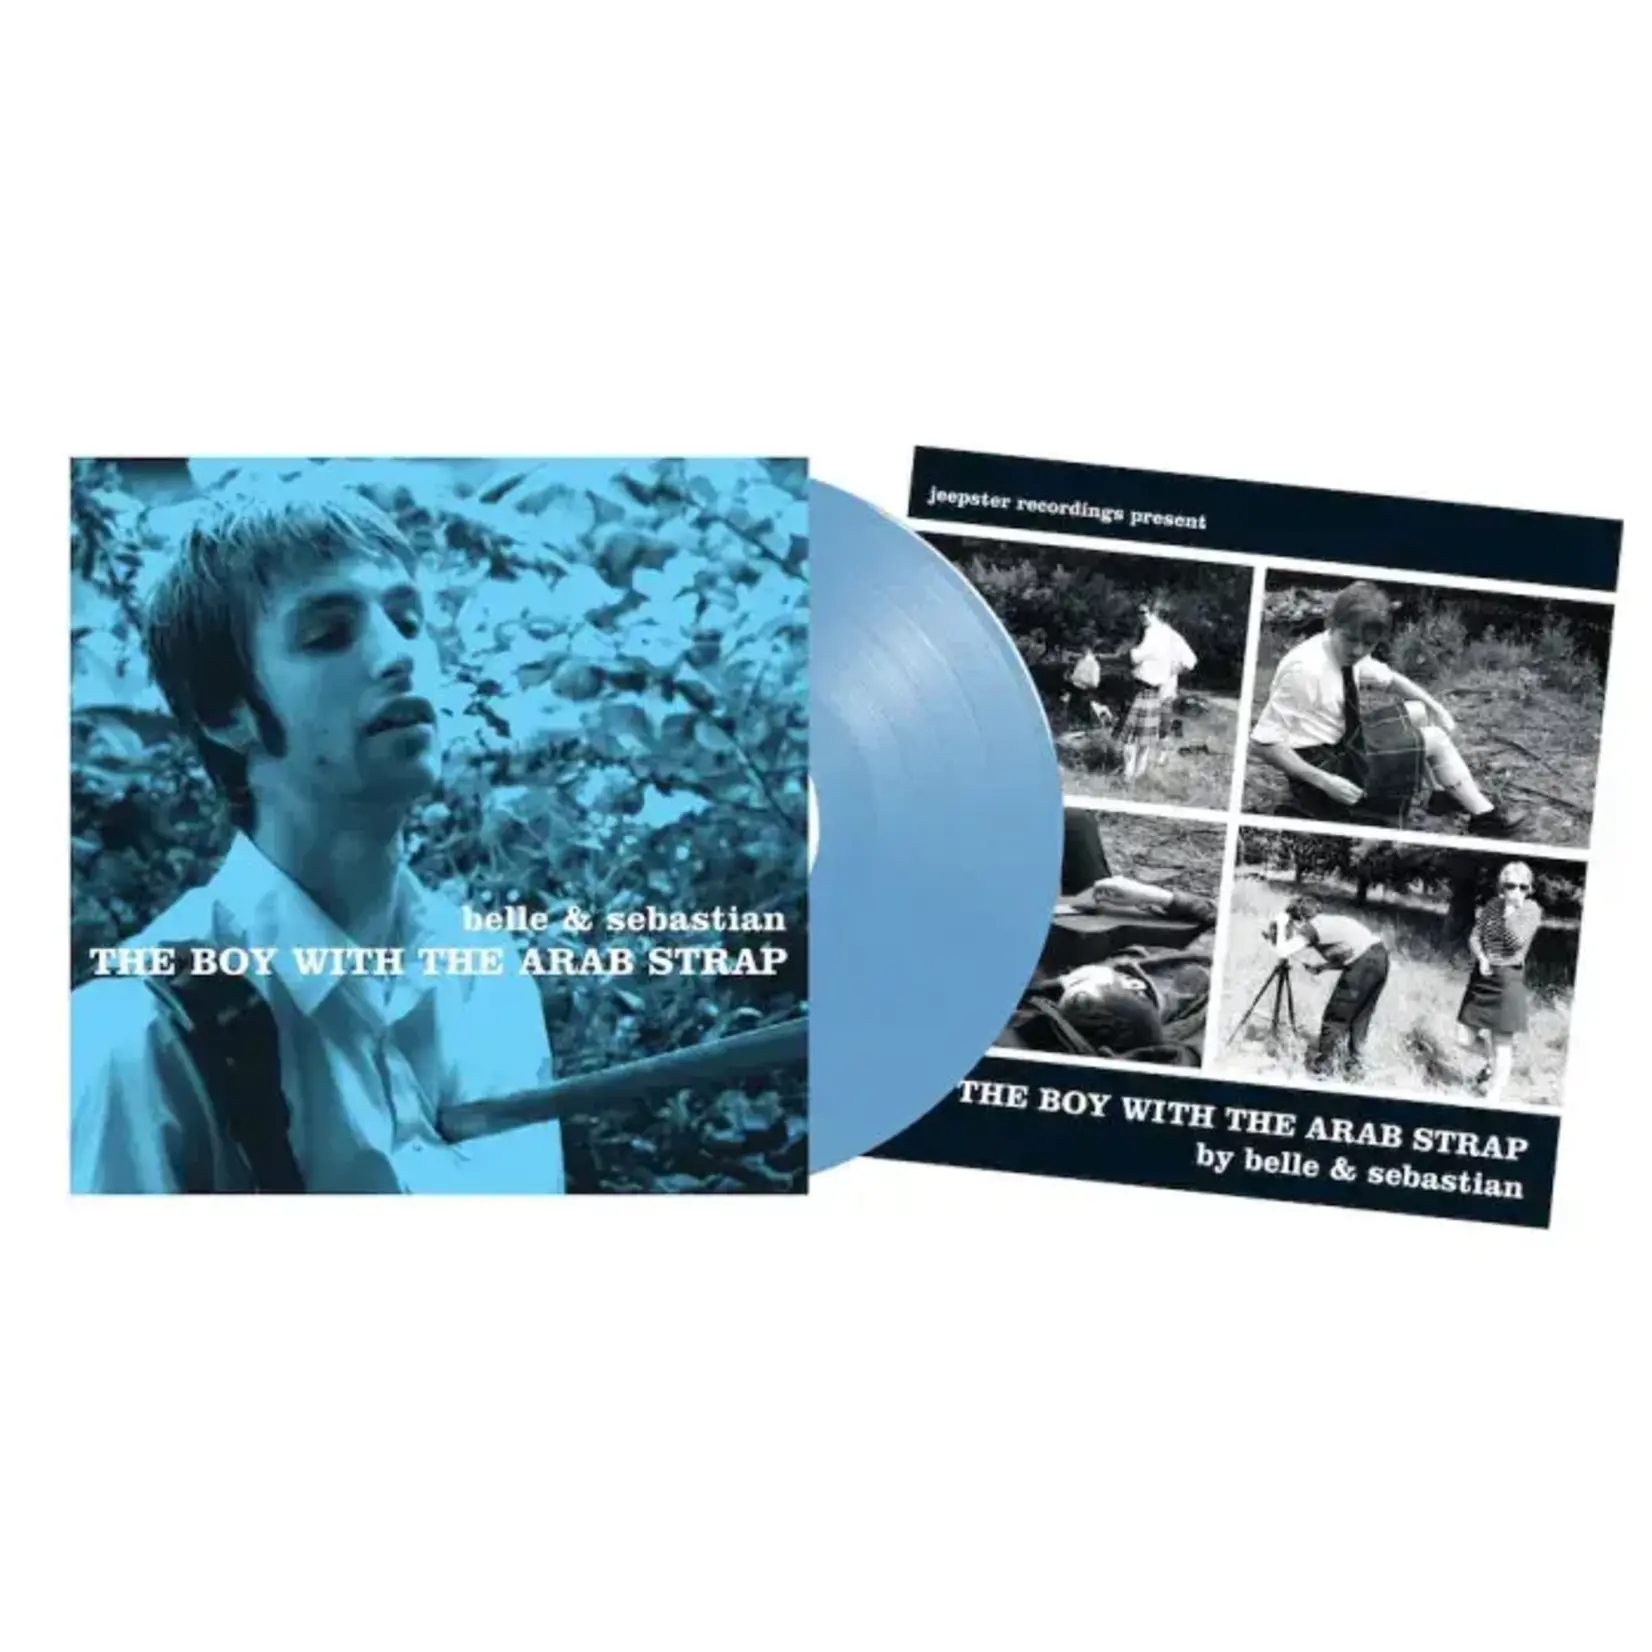 [New] Belle & Sebastian - The Boy With the Arab Strap (25th Anniversary, blue vinyl)